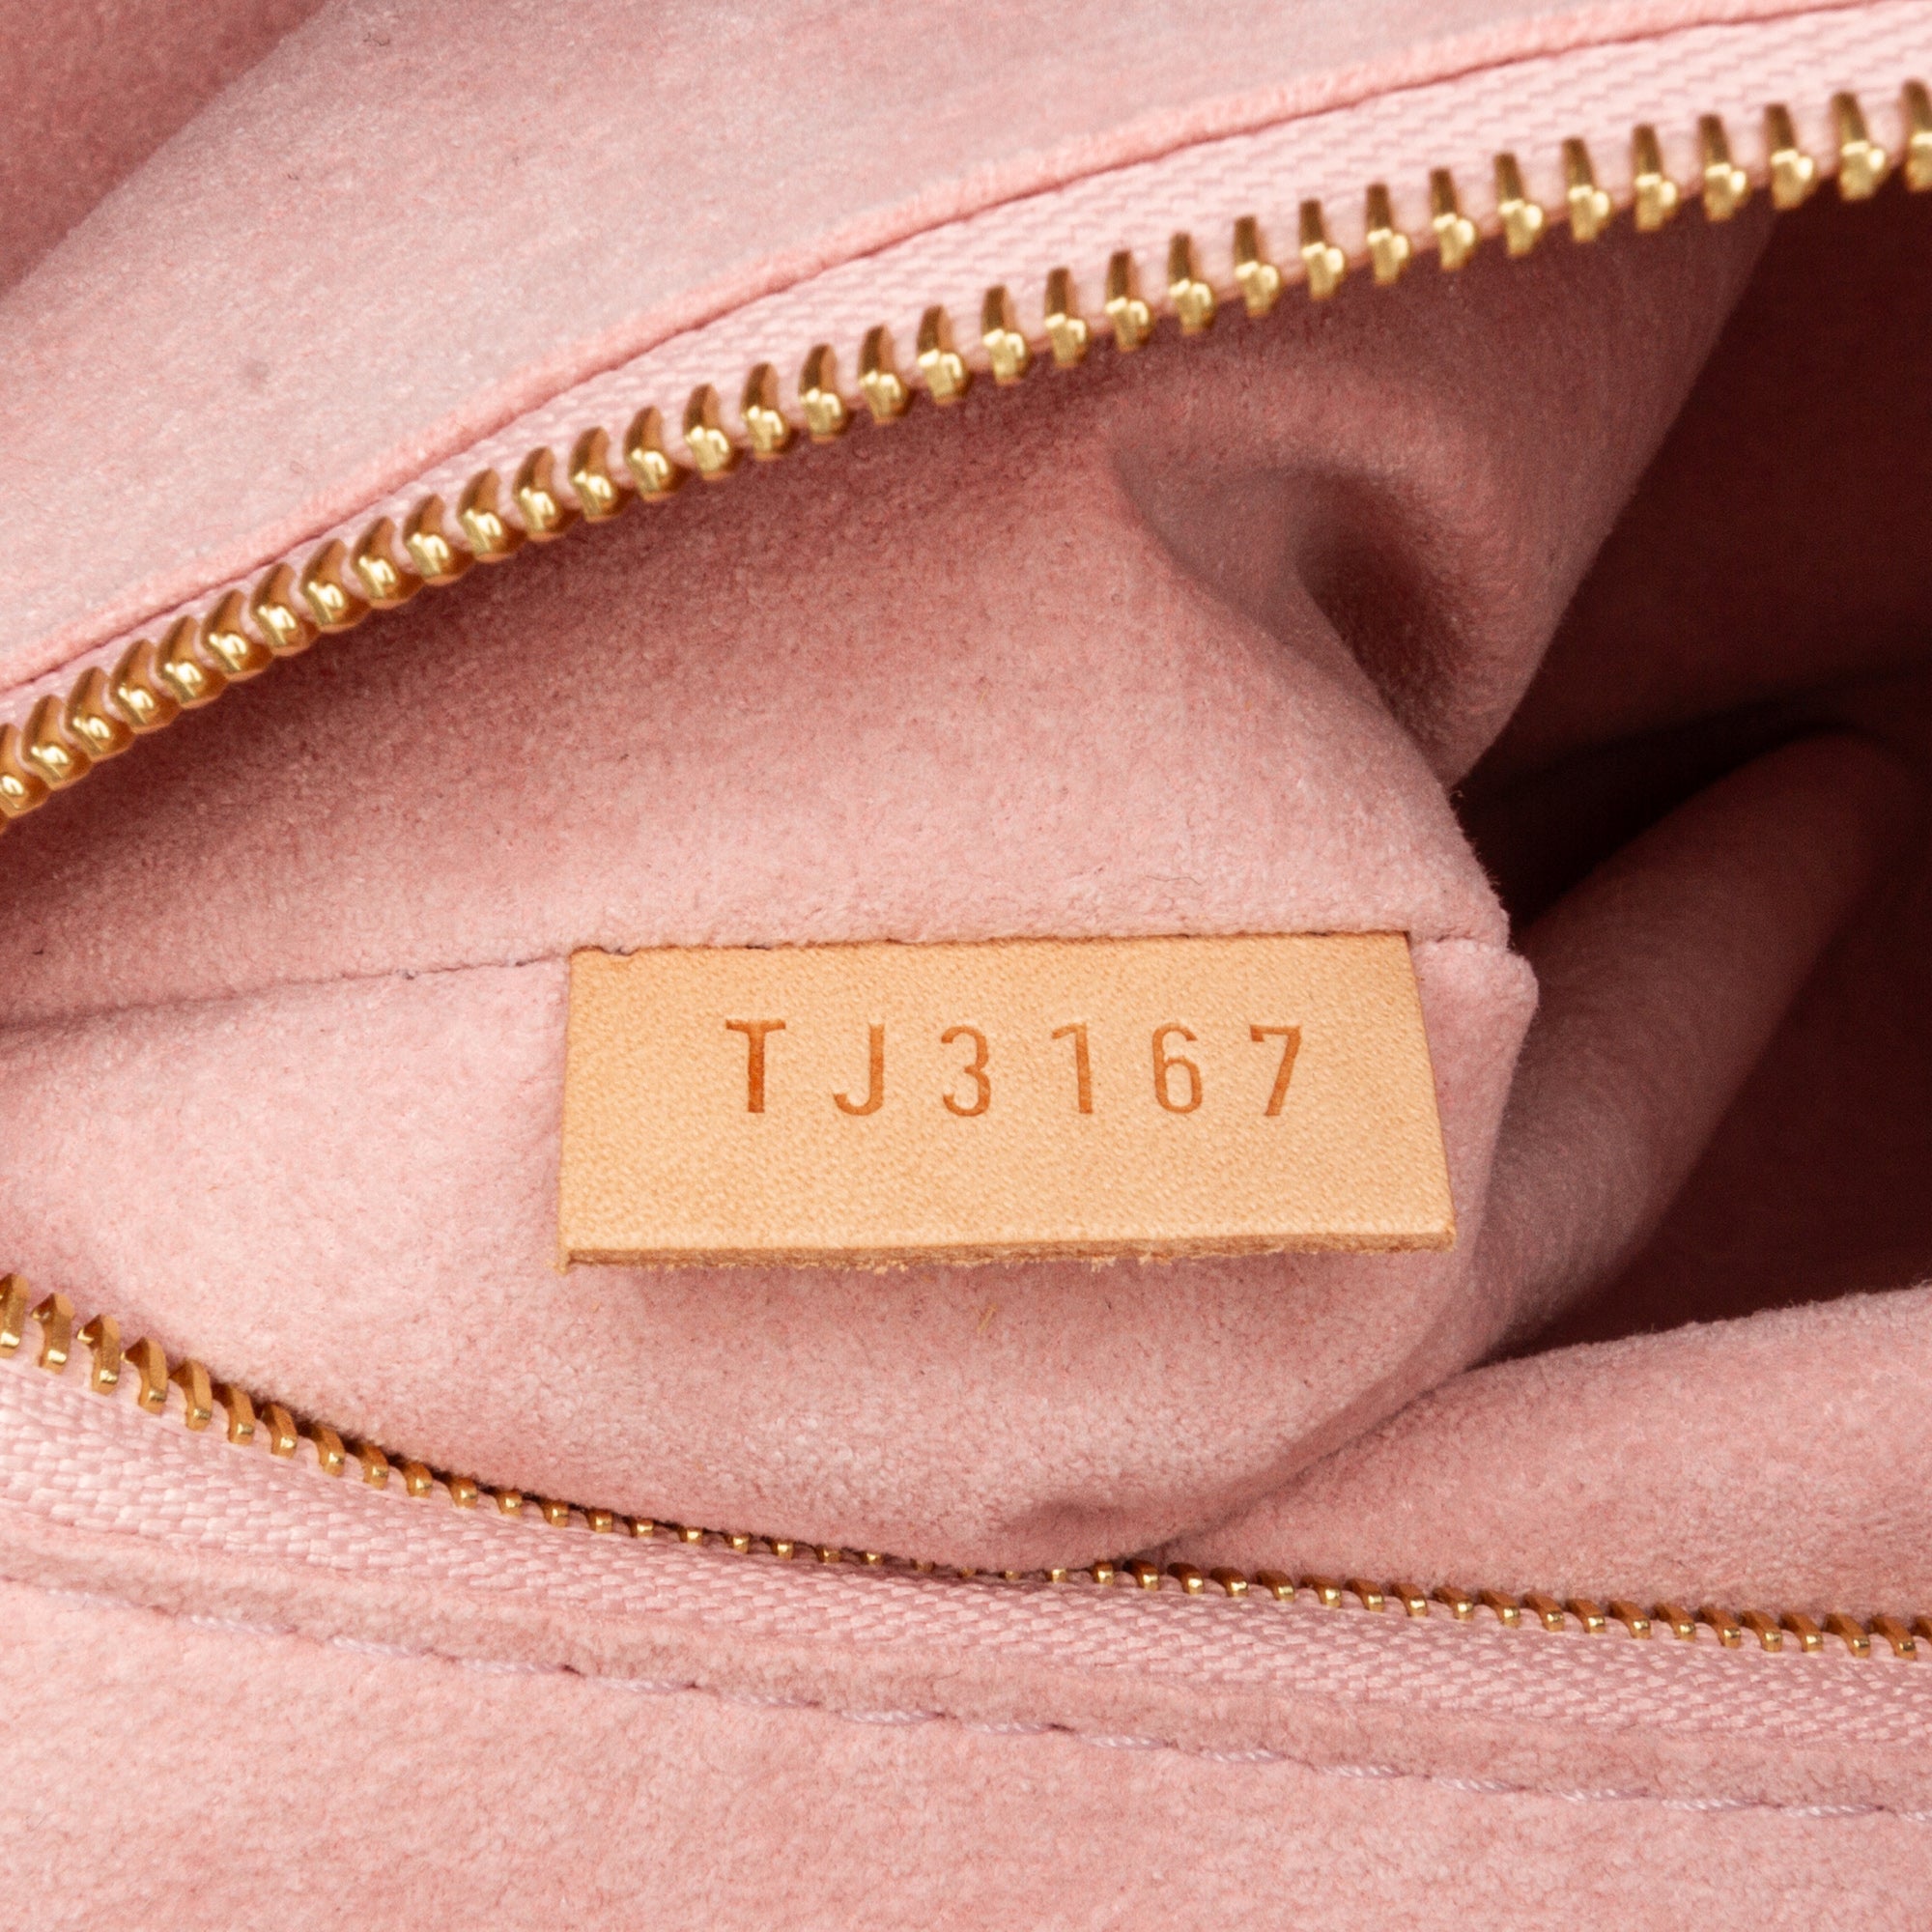 Louis Vuitton Propriano Damier Azur – Luxi Bags